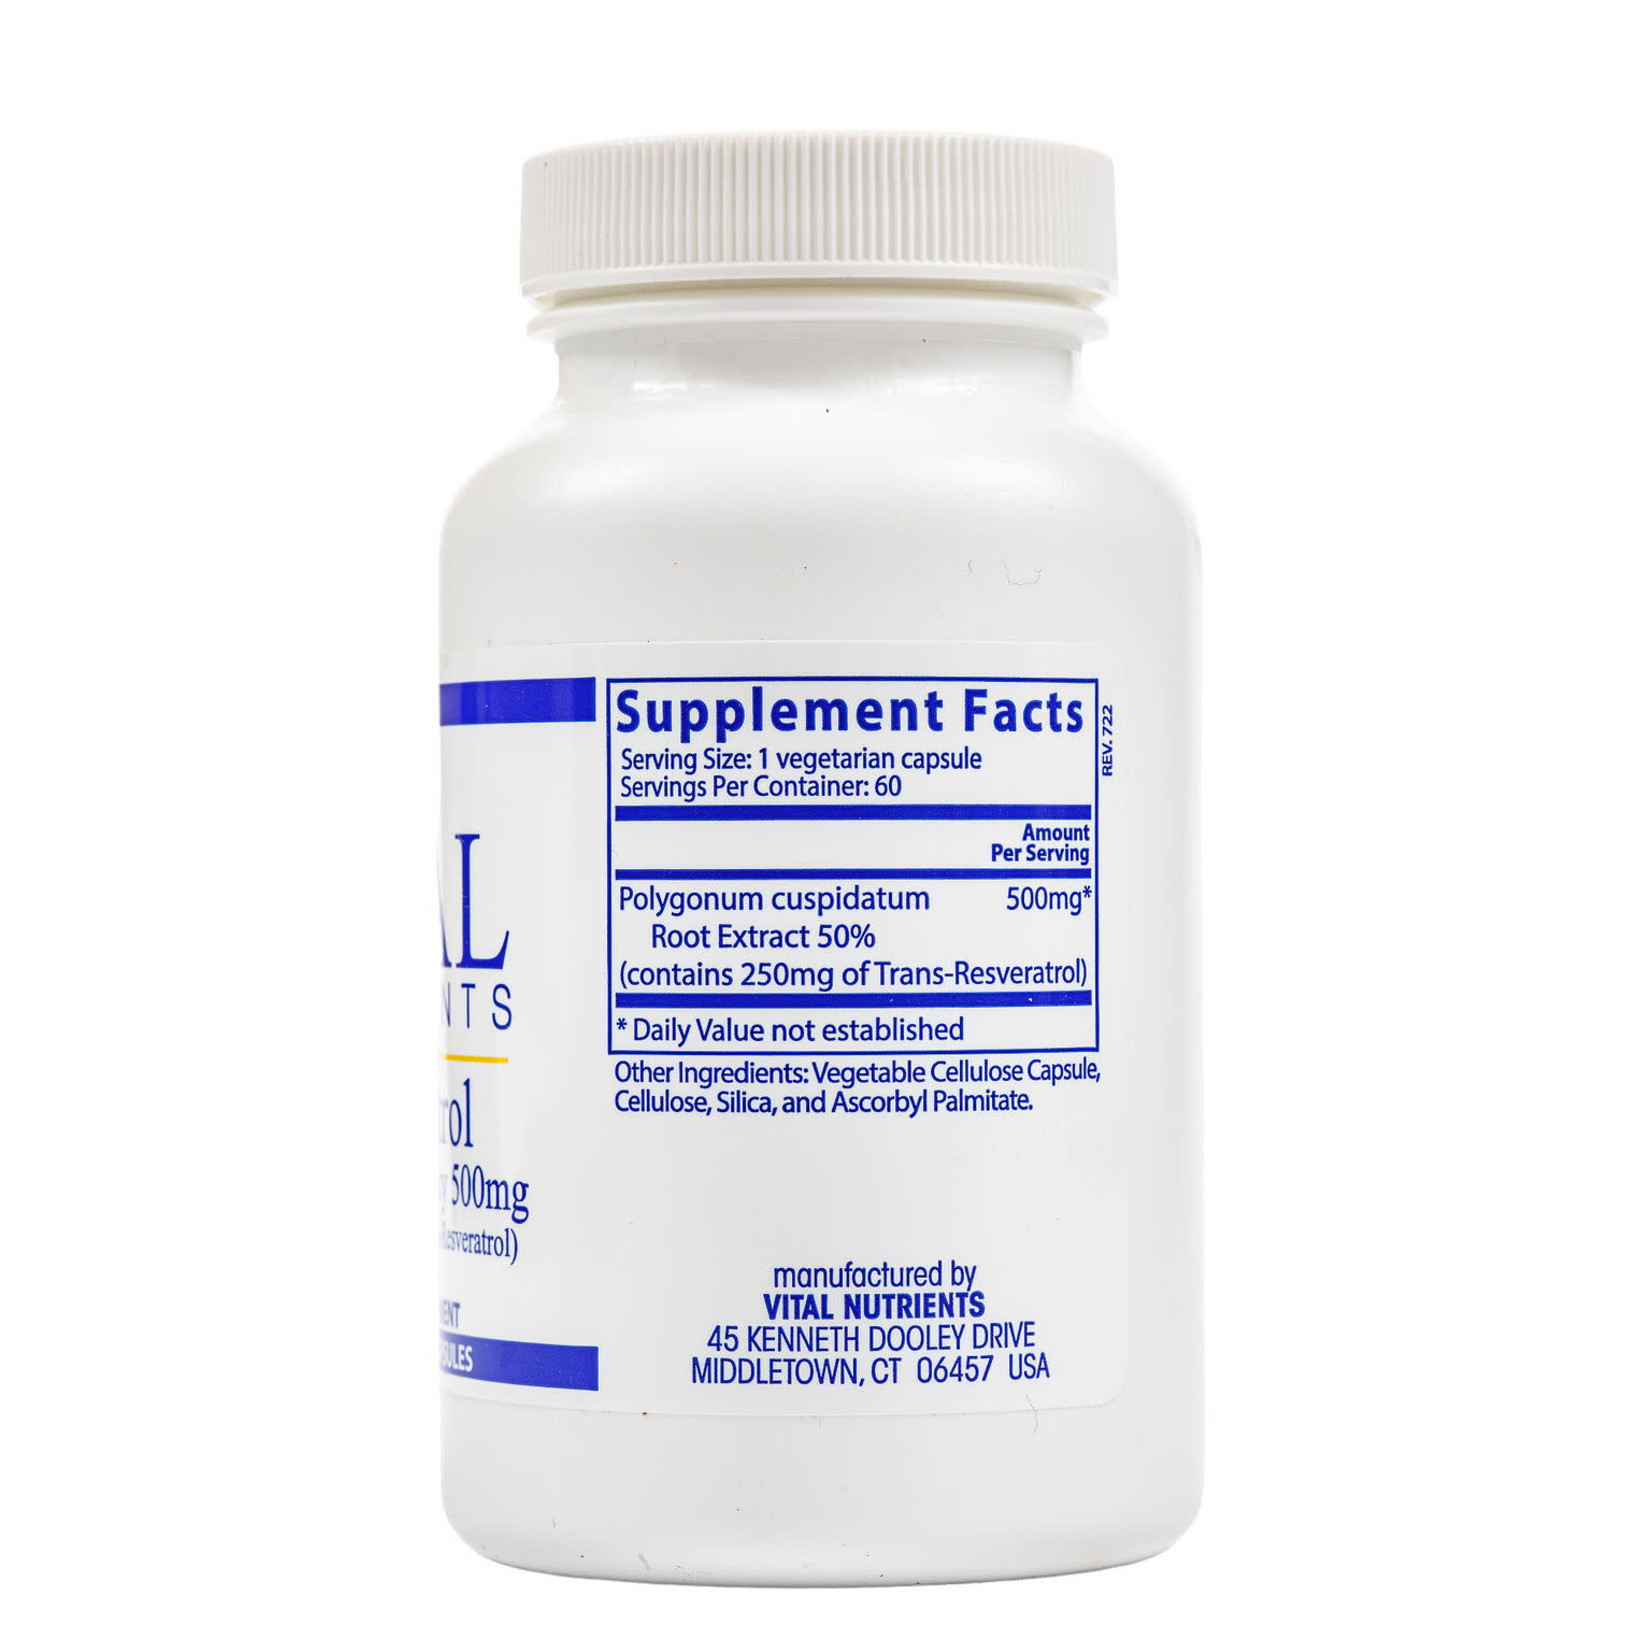 Vital Nutrients Resveratrol Ultra High Potency 500mg 60c Vital Nutrients